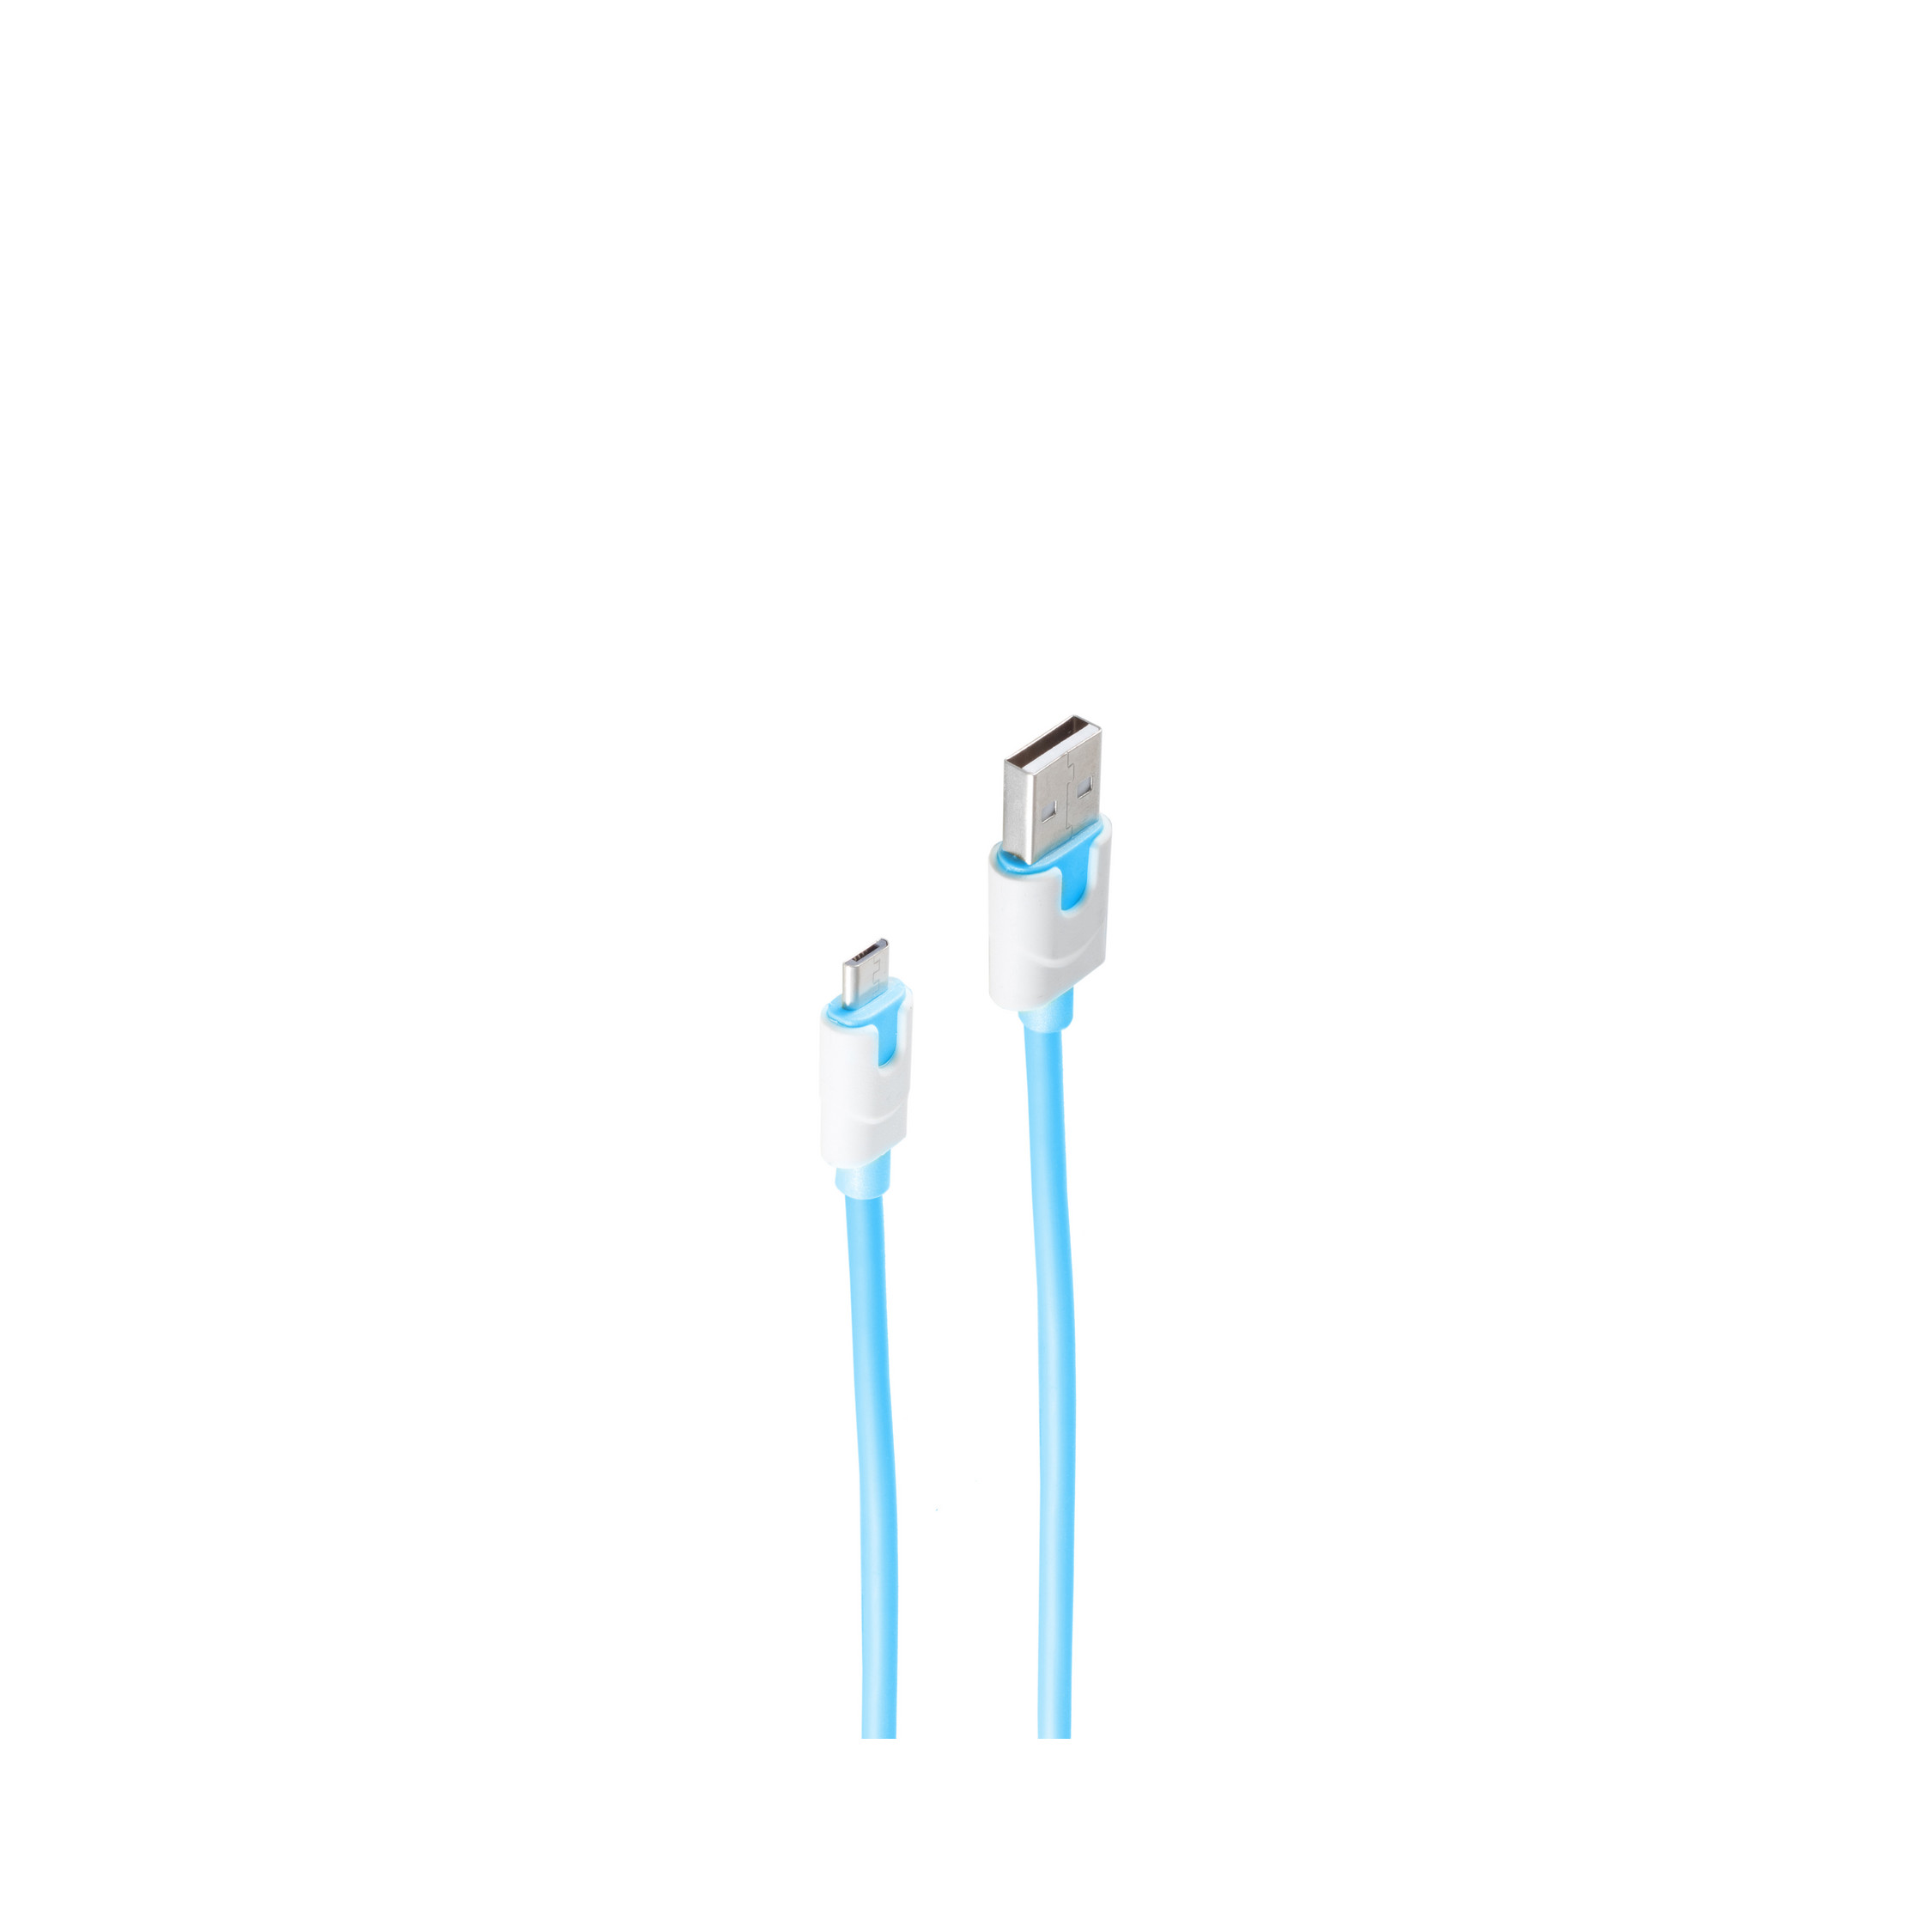 SHIVERPEAKS USB-Ladekabel A Stecker USB blau auf Ladekabel, m, Micro B, 2m, 2 blau, USB